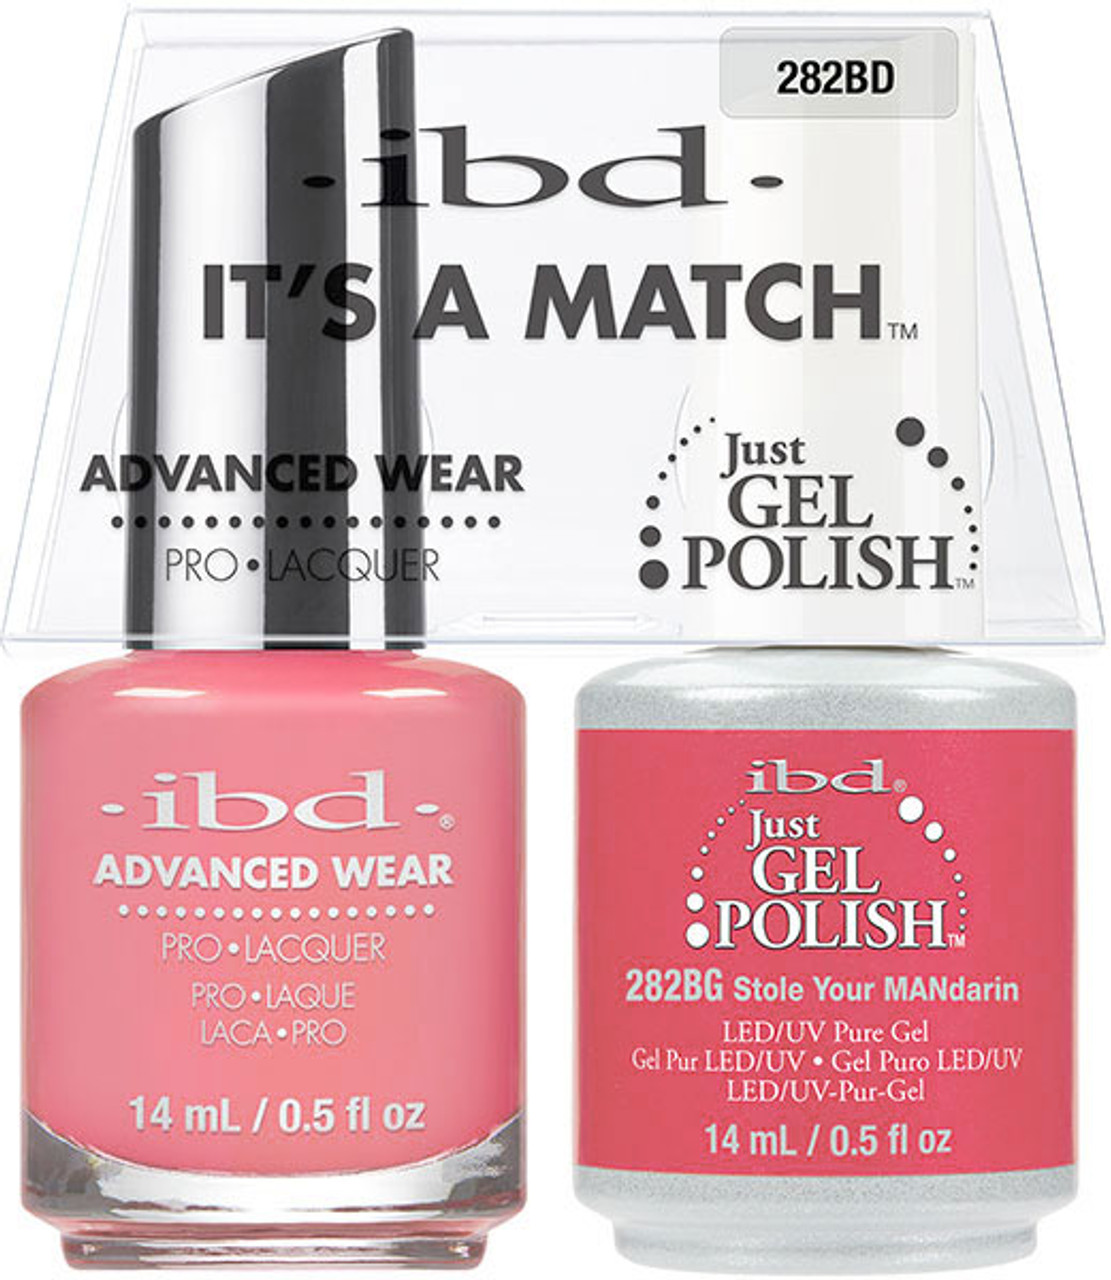 ibd It's A Match Advanced Wear Duo 282BD Stole Your MANdarin - 14 mL/ .5 oz